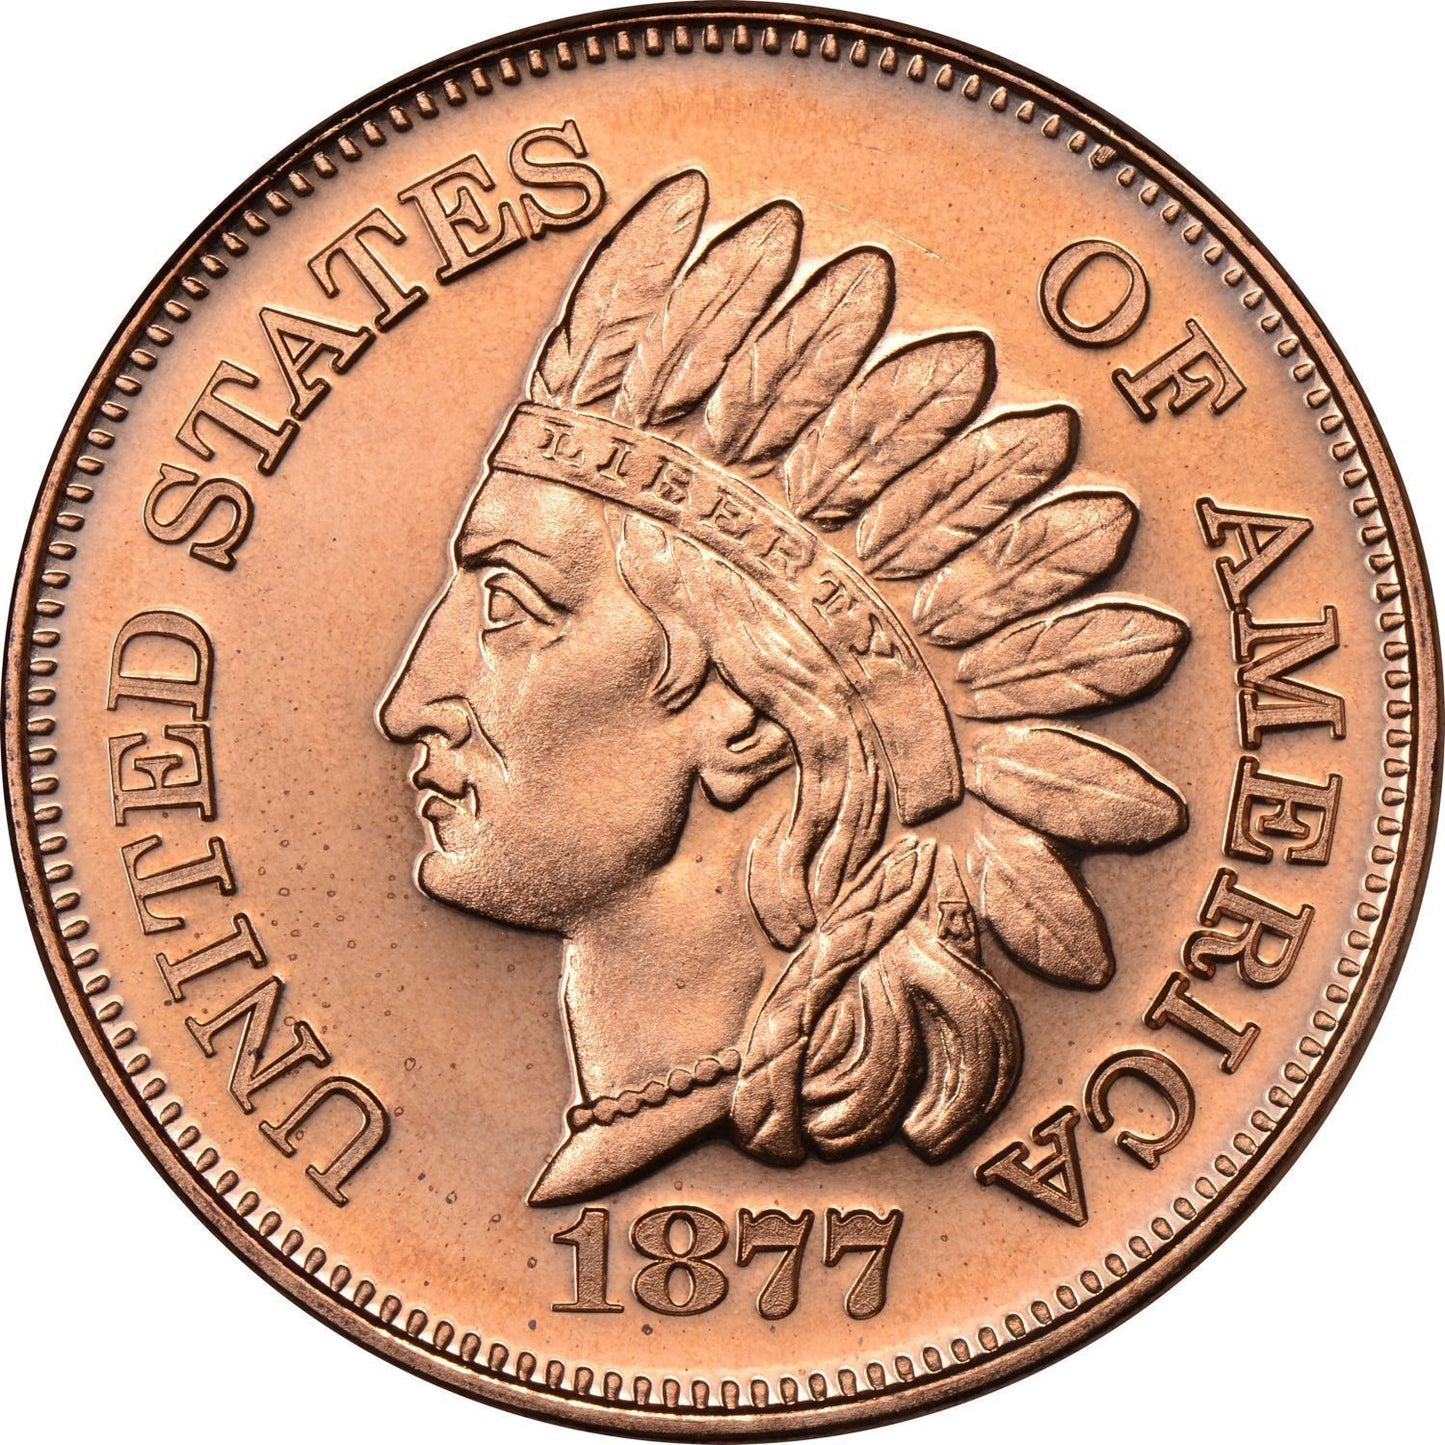 Two 1 Oz. Copper Bullion Coins Wooden Box 2